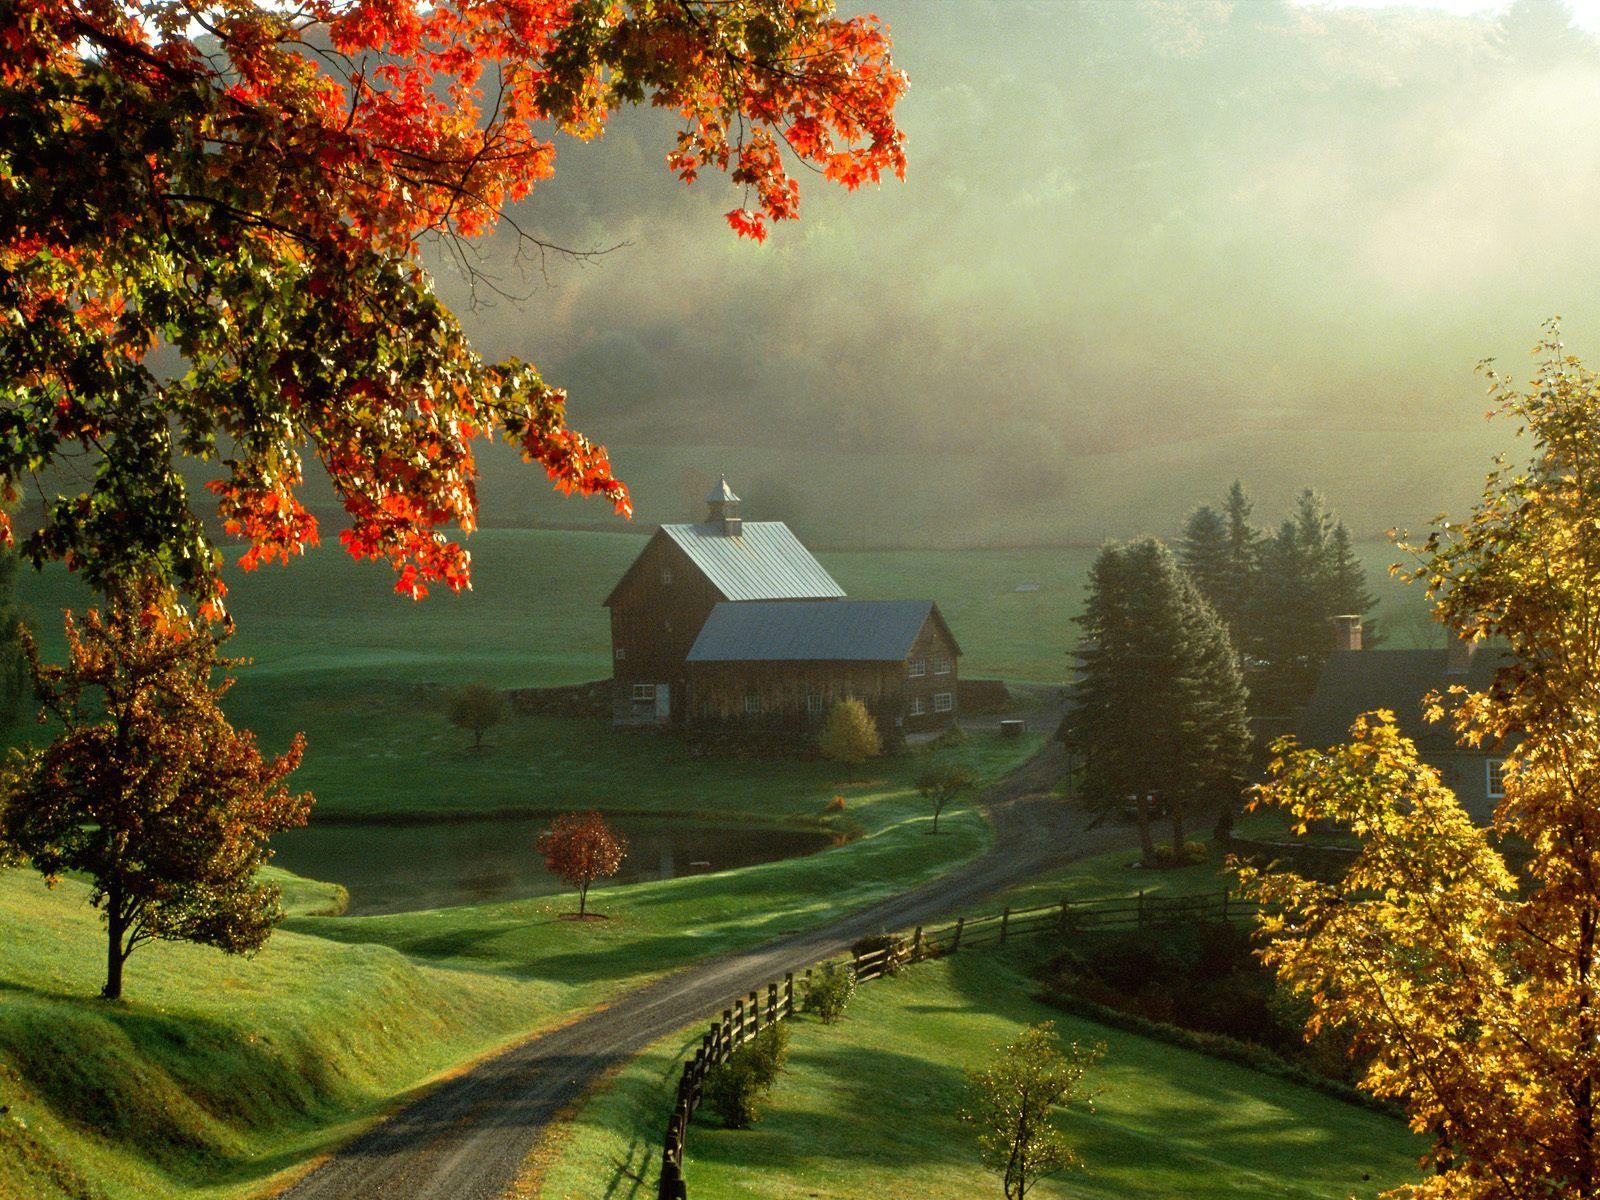 Architecture Wallpaper: Farms Wallpaper. Autumn wallpaper hd, Beautiful places nature, Nature wallpaper